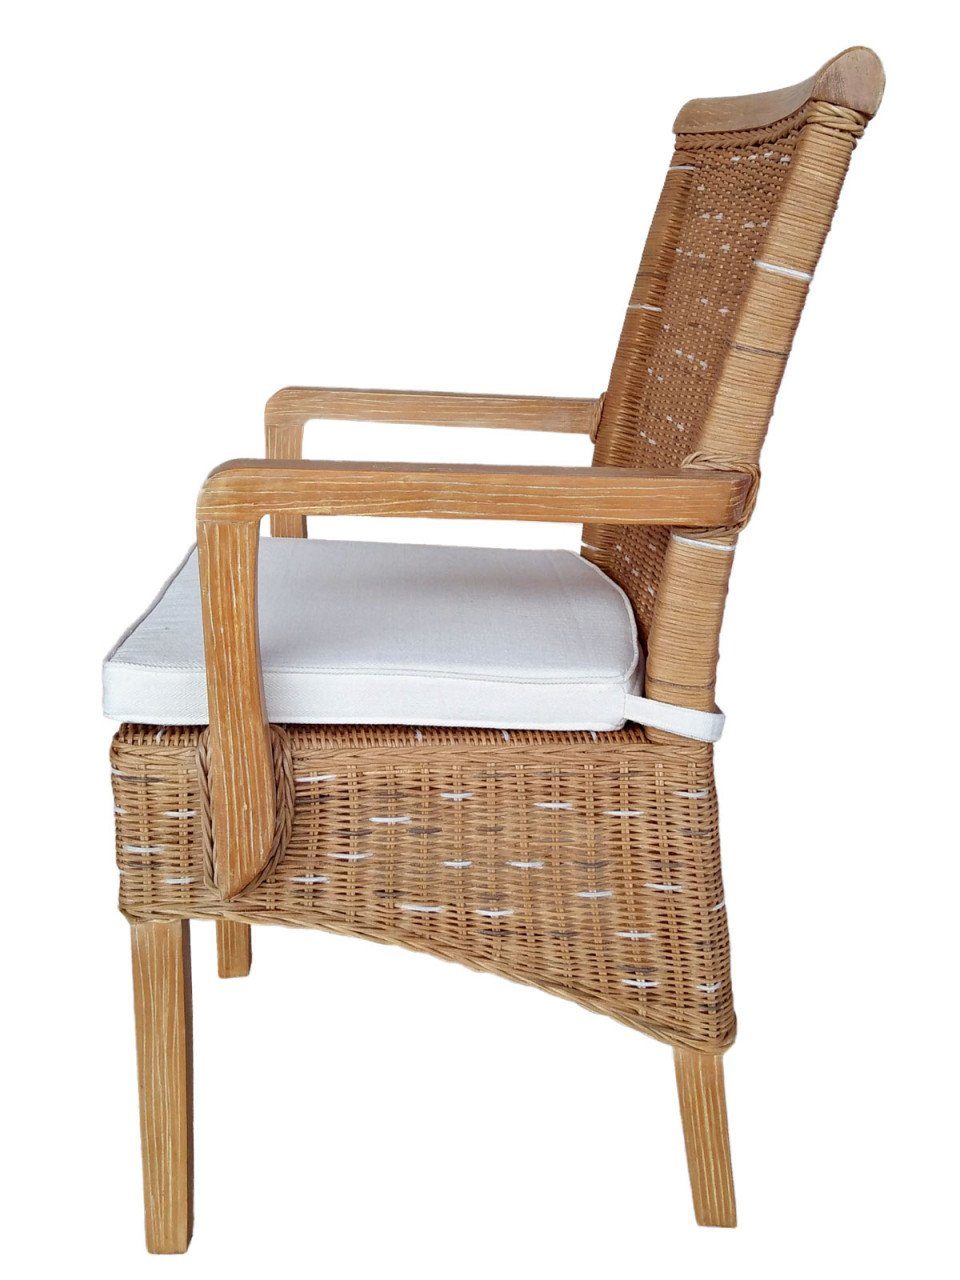 soma Sessel Soma Esszimmer-Stühle-Set mit braun Pert, Sitzmöbel Sitzplatz Sessel 2 Stuhl Stück Rattanstuhl Armlehnen